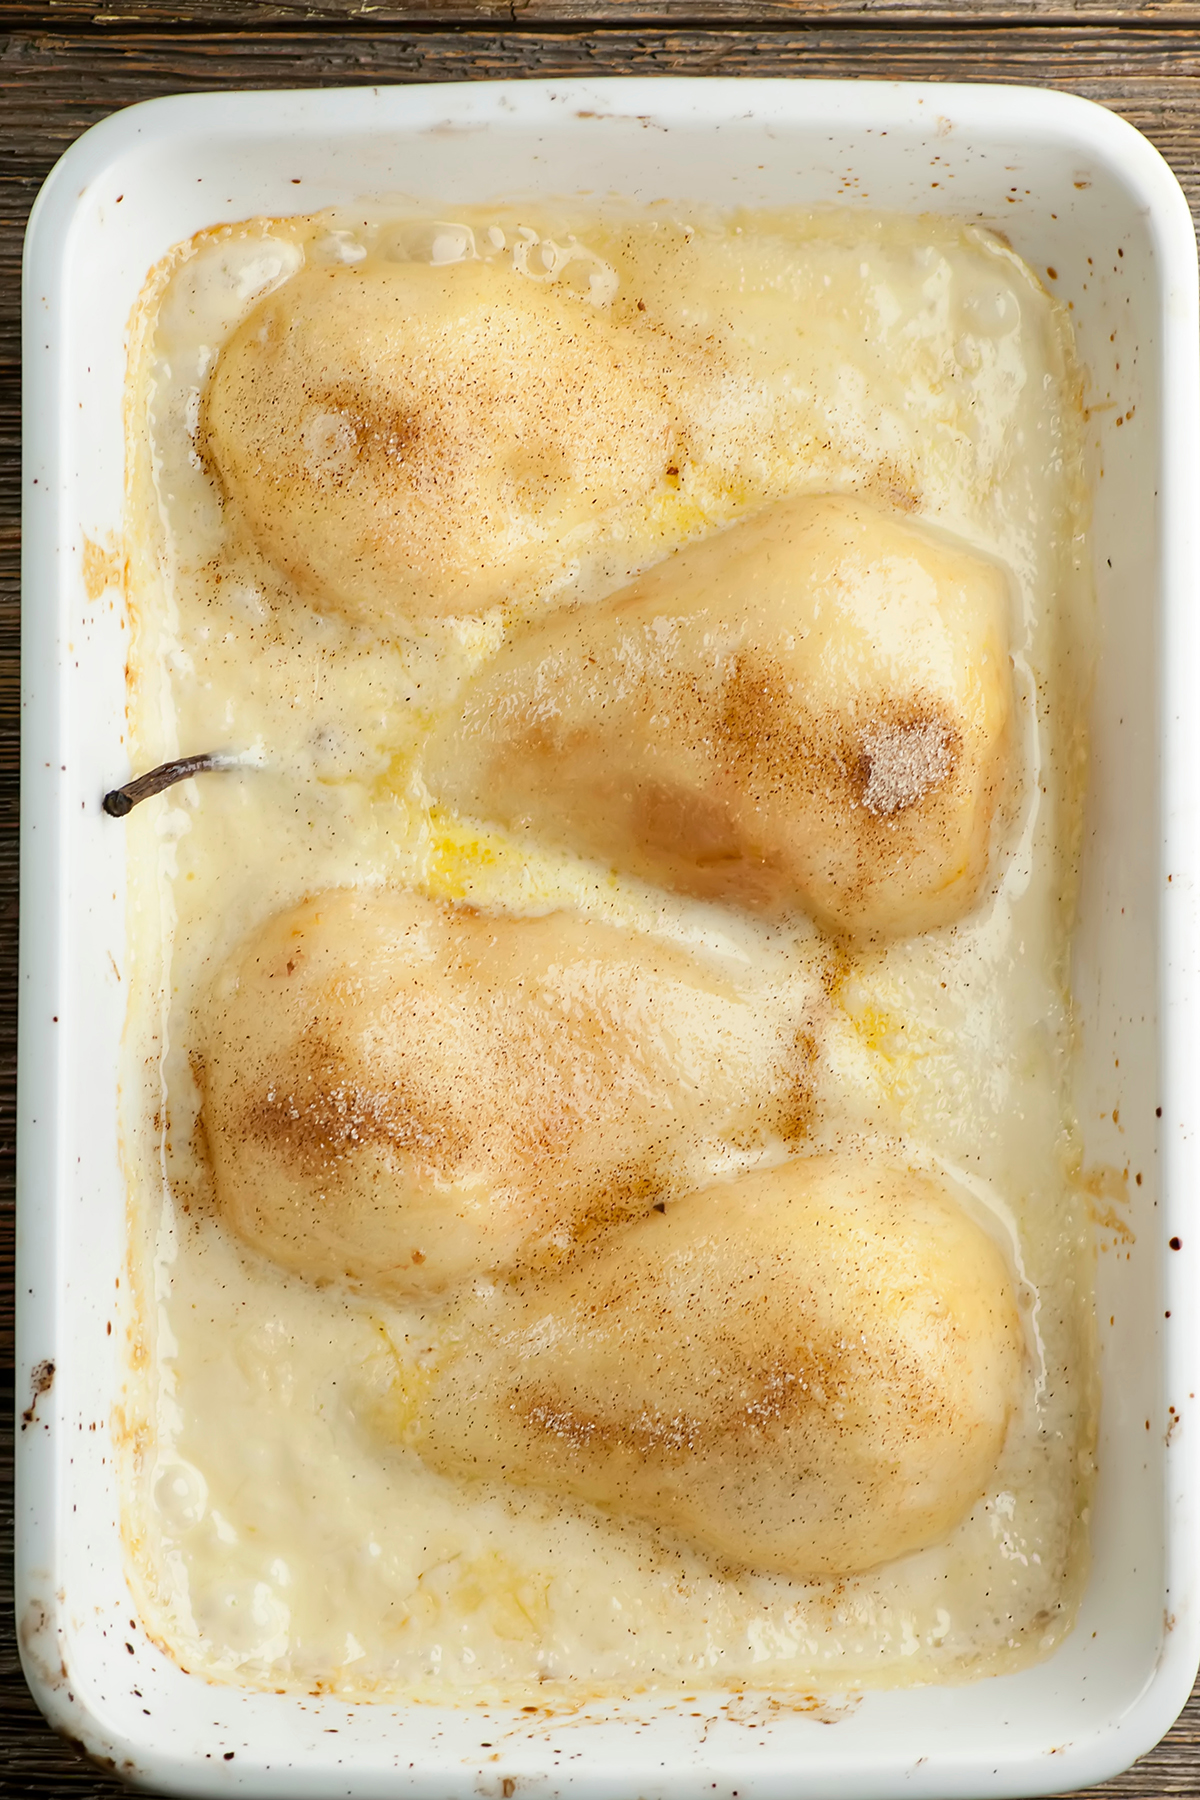 Baked pears in vanilla cream sauce ini a casserole dish.